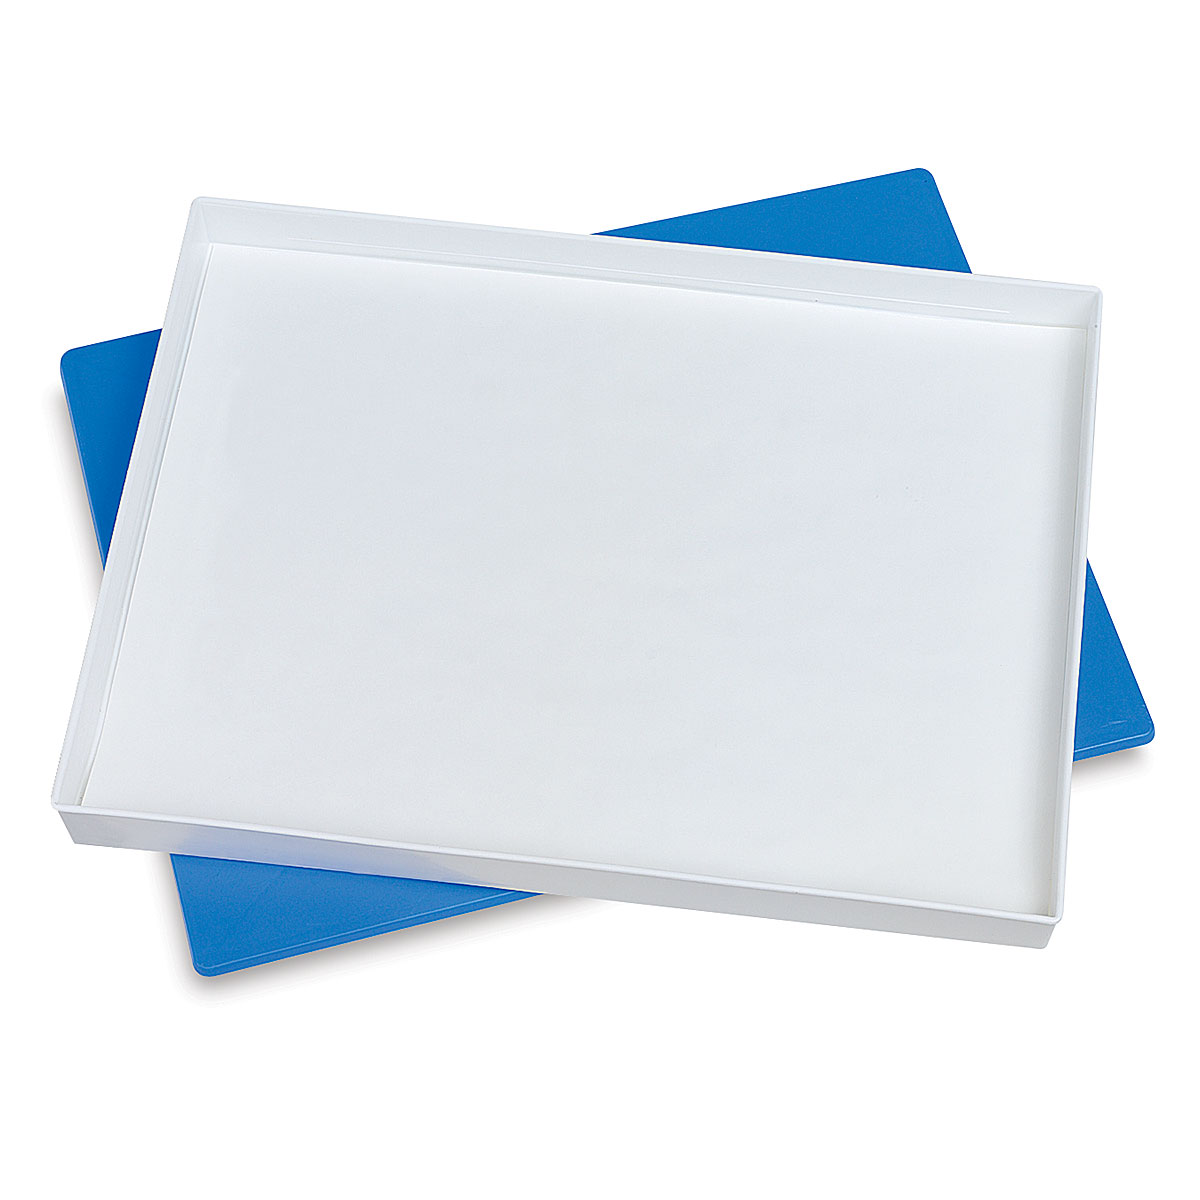 Masterson Sta-Wet Handy Palette Paper Refills - 30 sheets – K. A. Artist  Shop